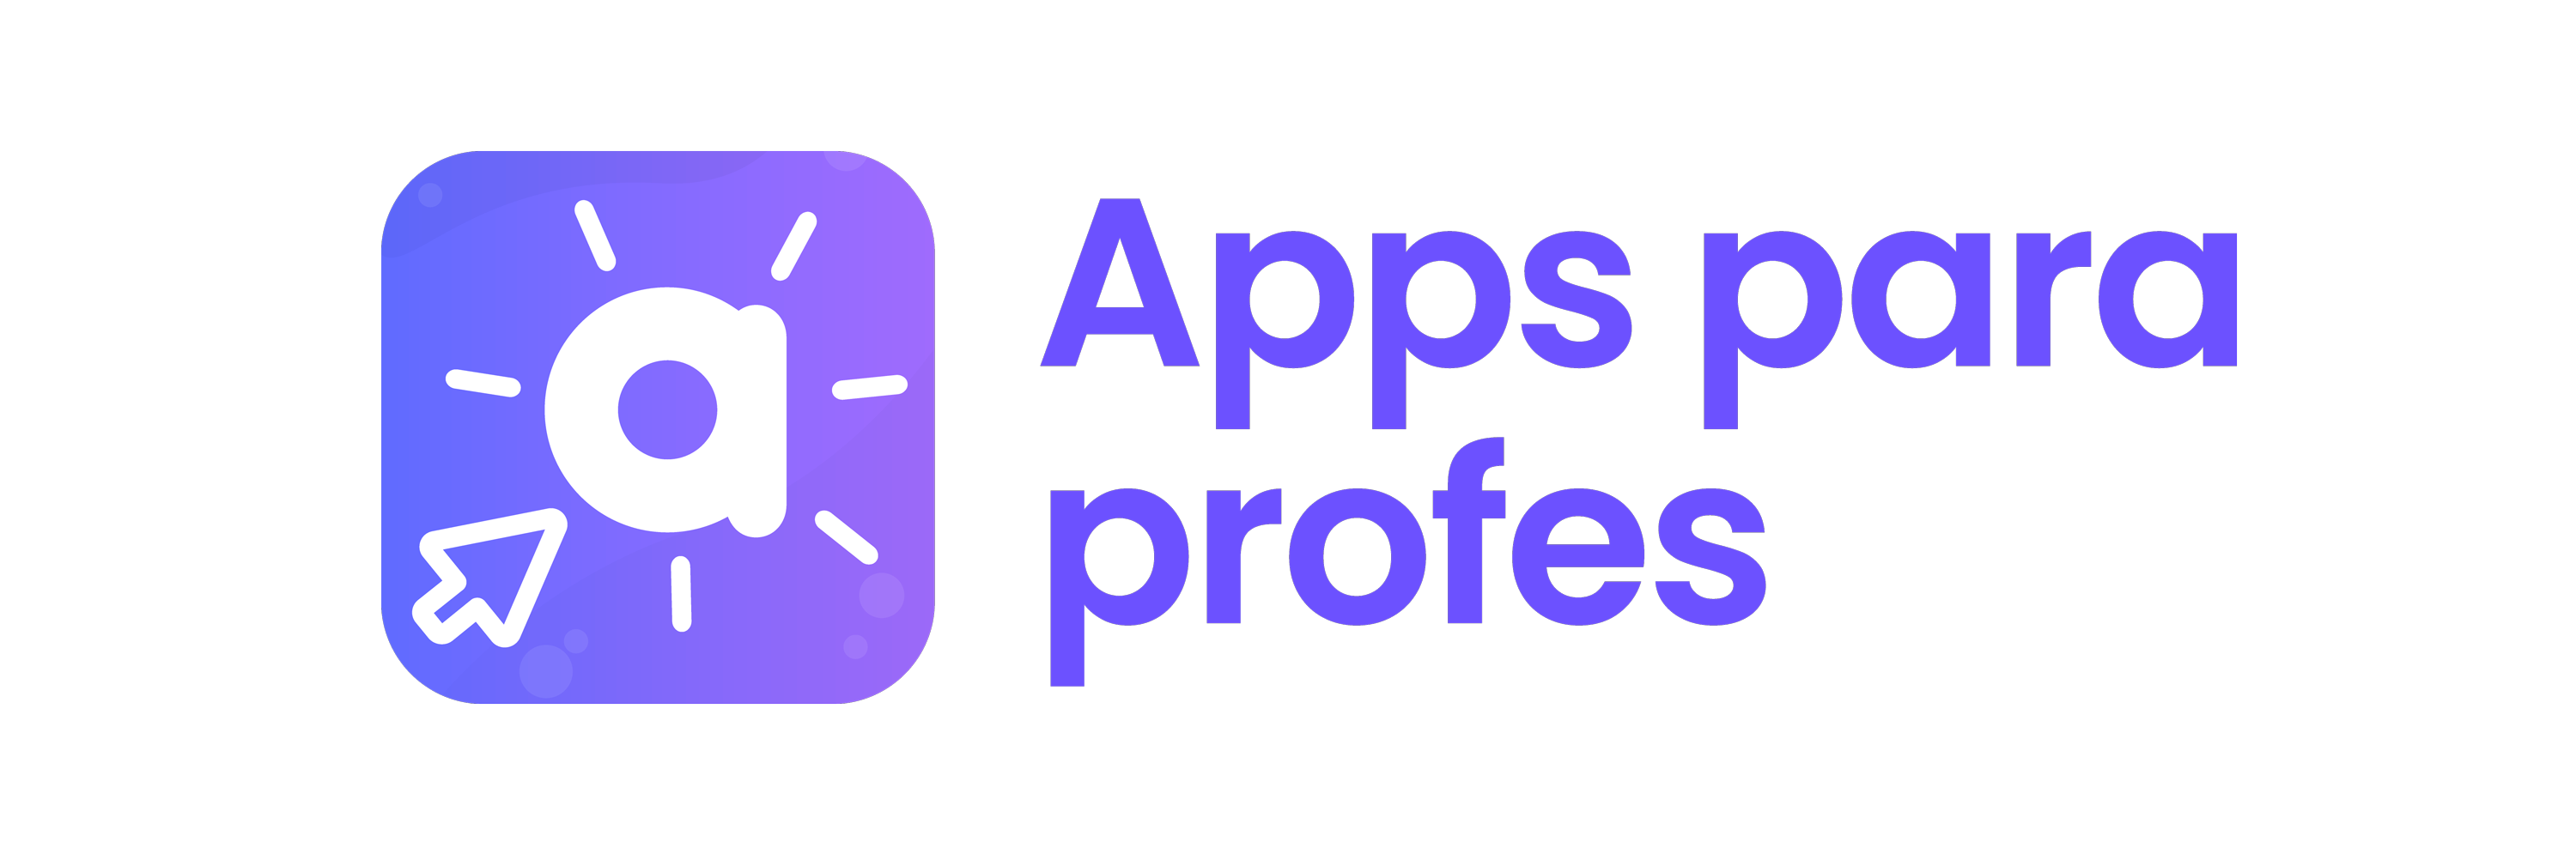 Apps para profes